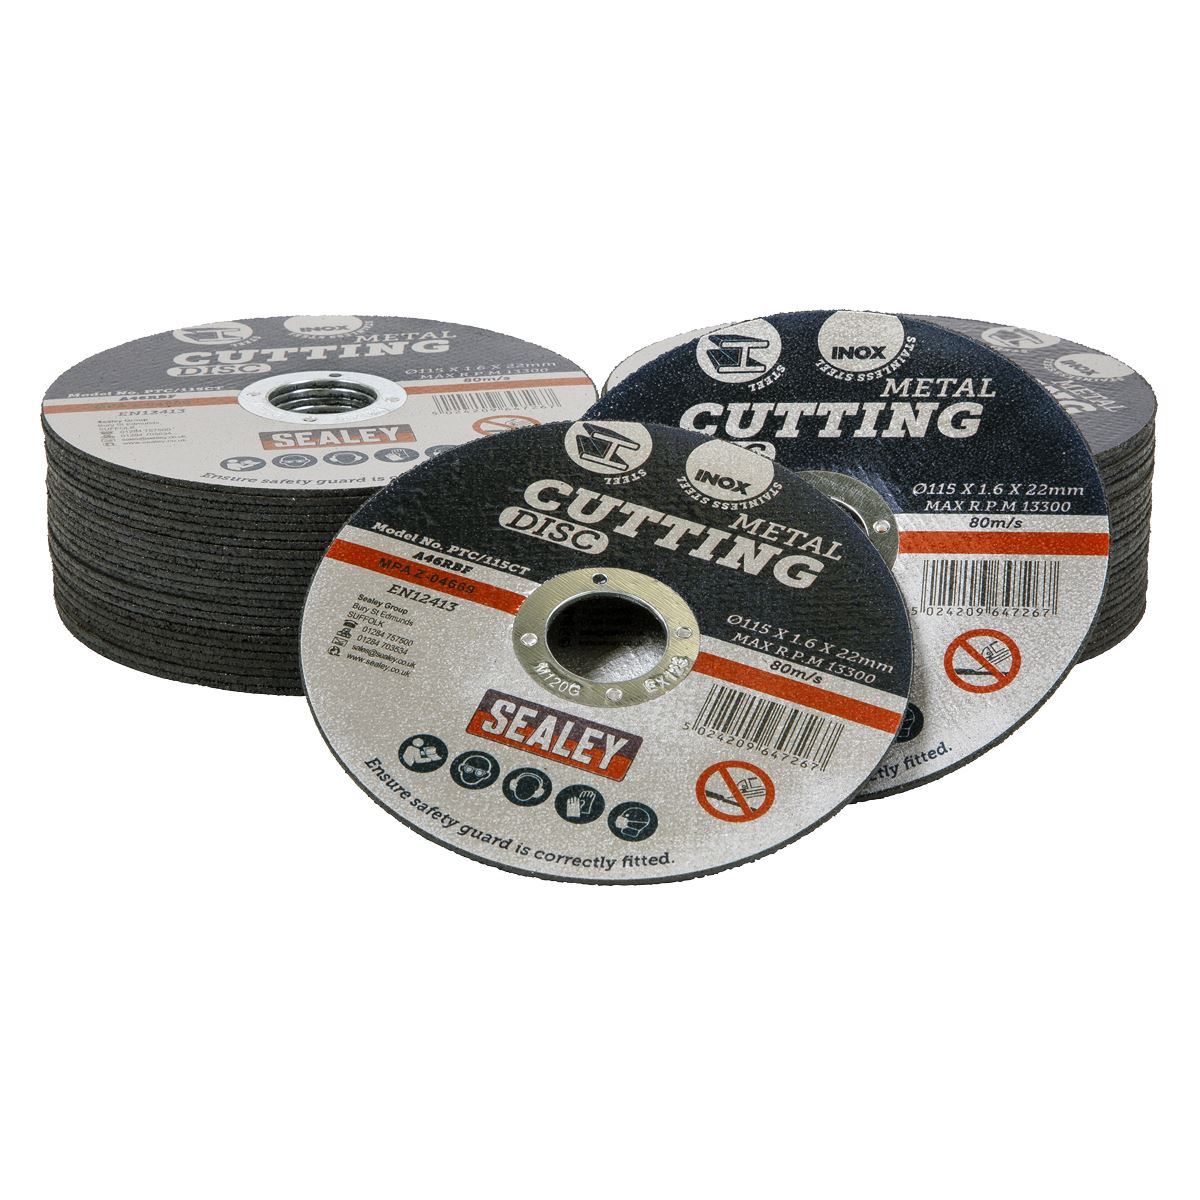 Sealey Cutting Disc Pack of 50 Ø115 x 1.6mm Ø22mm Bore